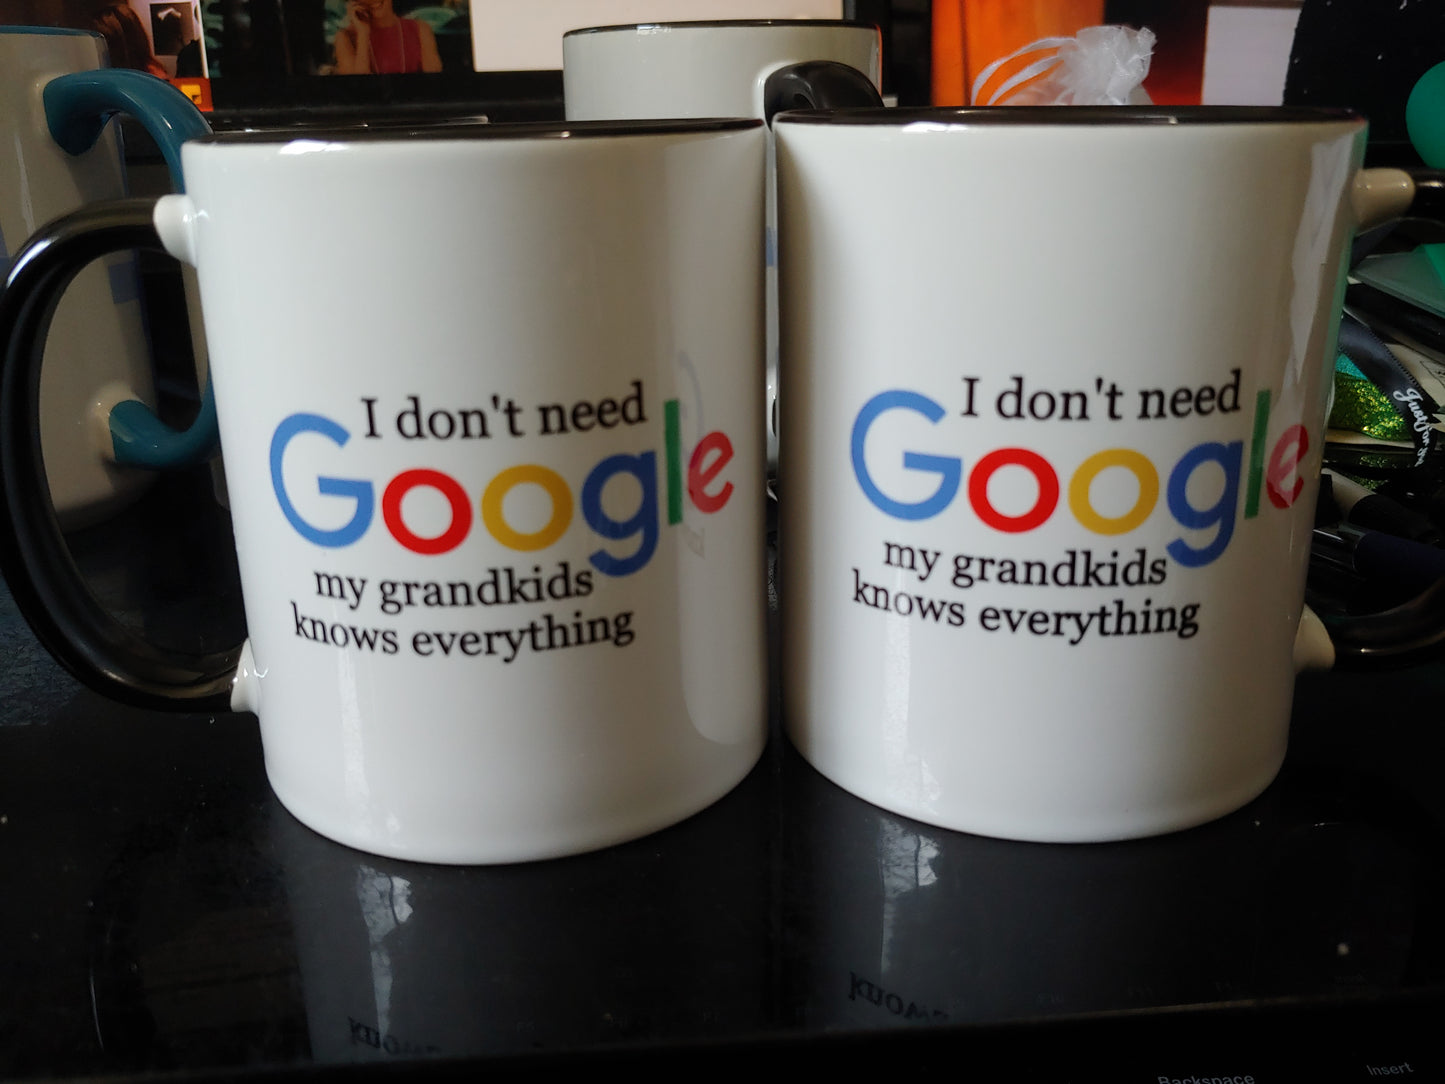 I Don't Know Google my grandkids knows everything (11oz black inner/handle mug w/design on both sides, grammatical error)